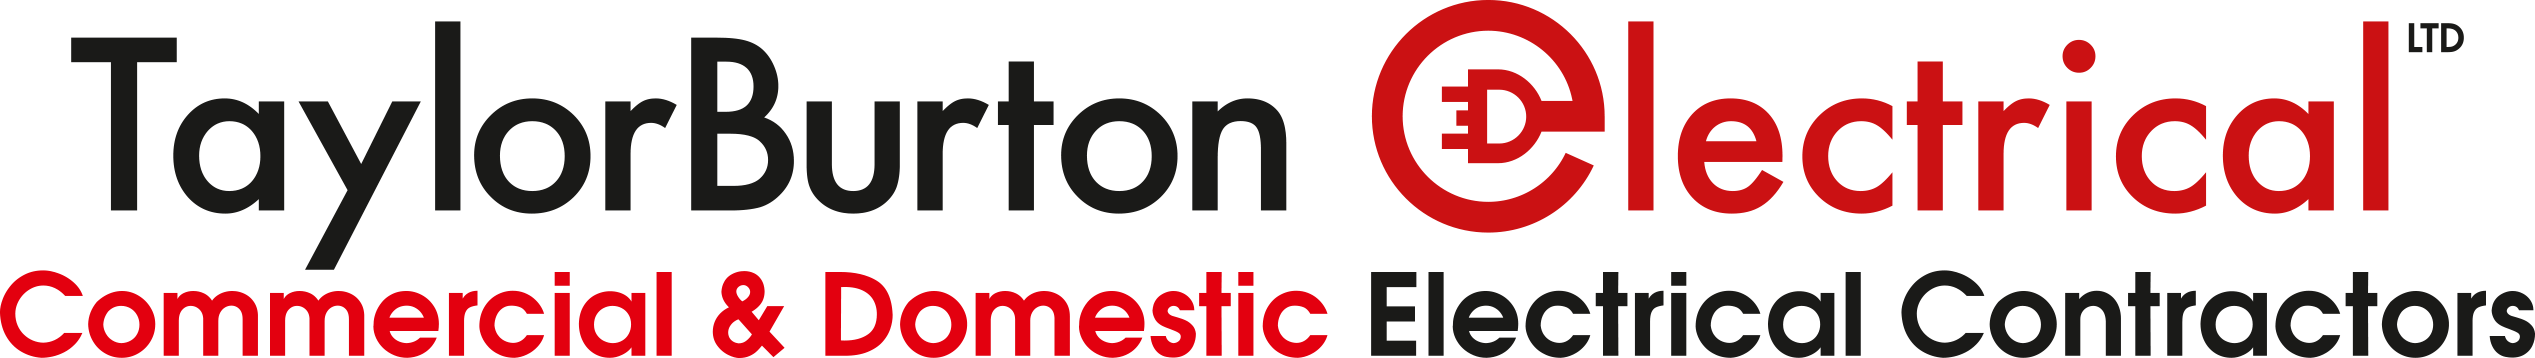 TaylorBurton Electrical Logo